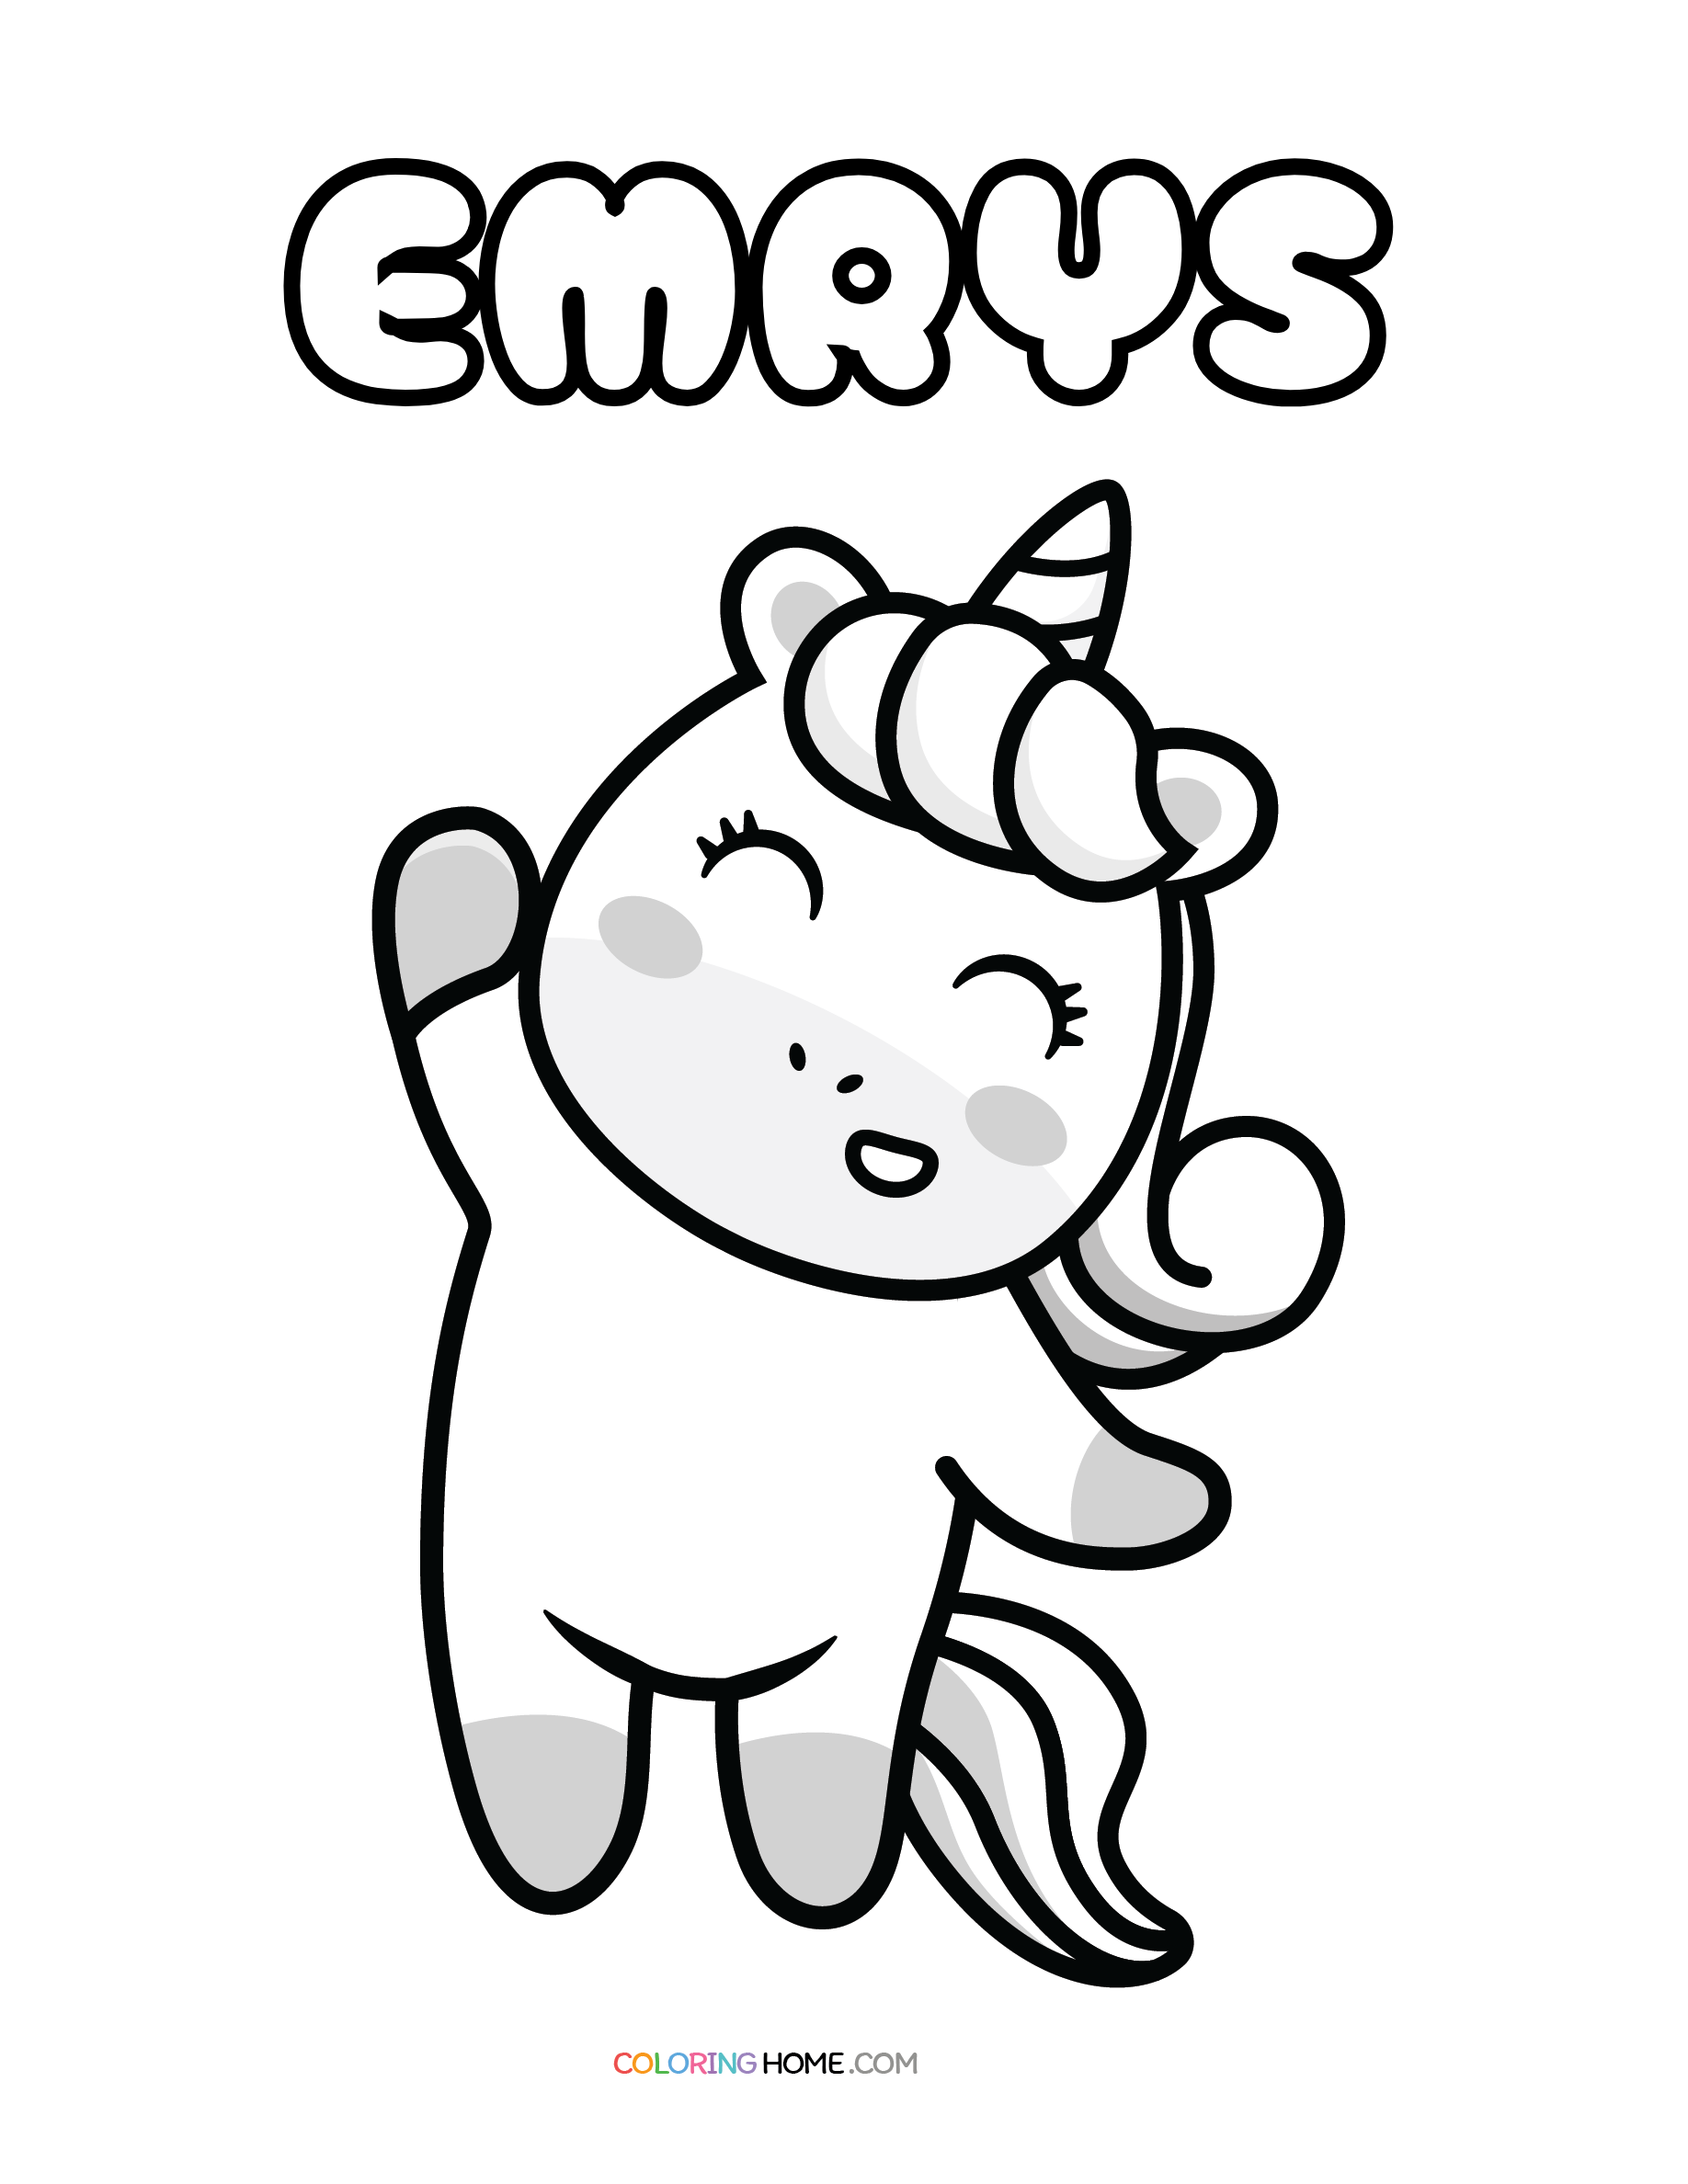 Emrys unicorn coloring page